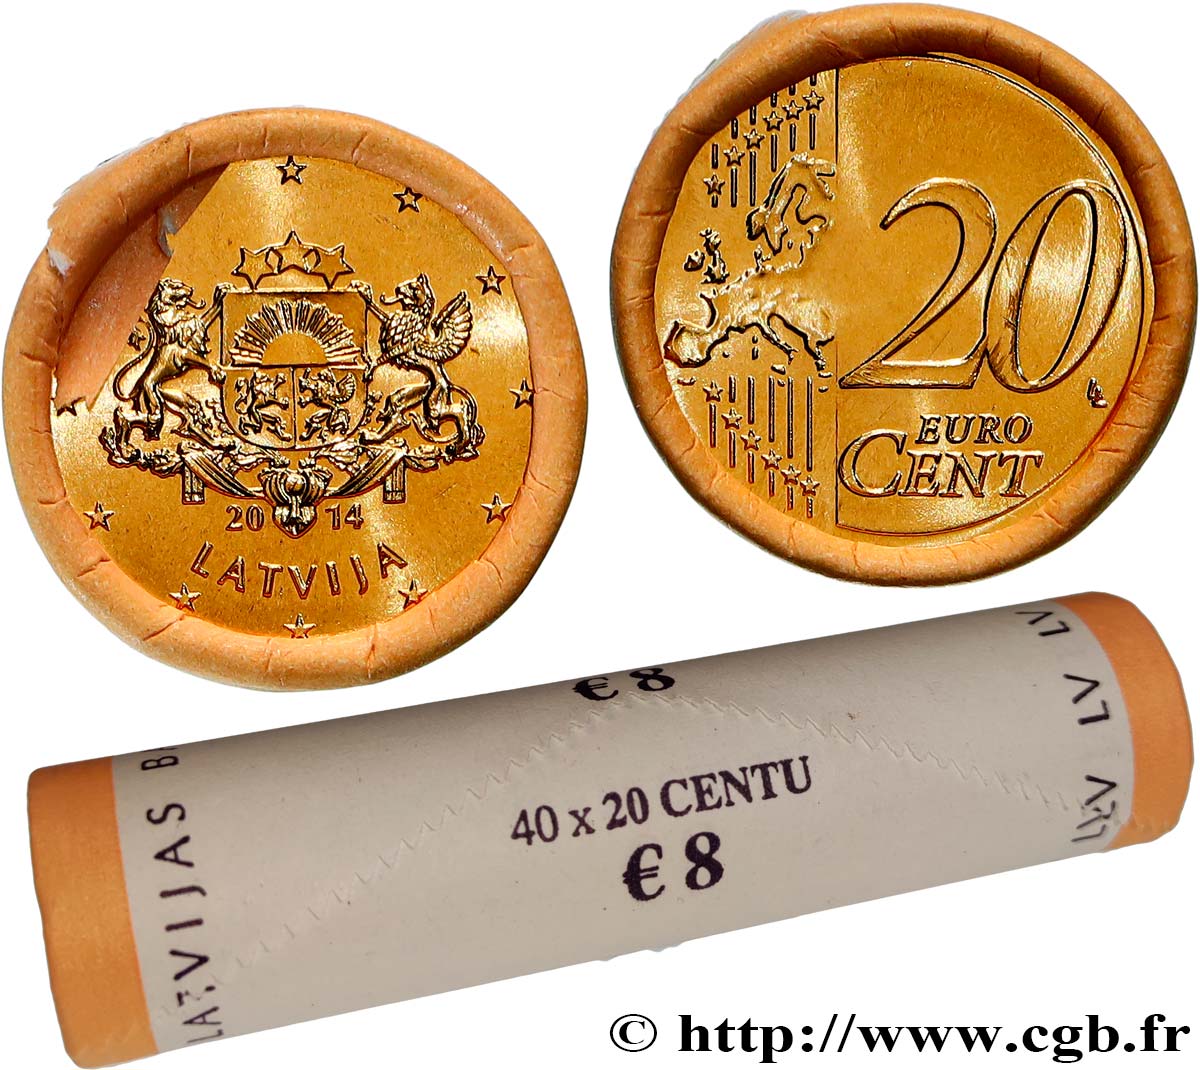 LETTLAND Rouleau 40 x 20 Cent Armoiries 2014